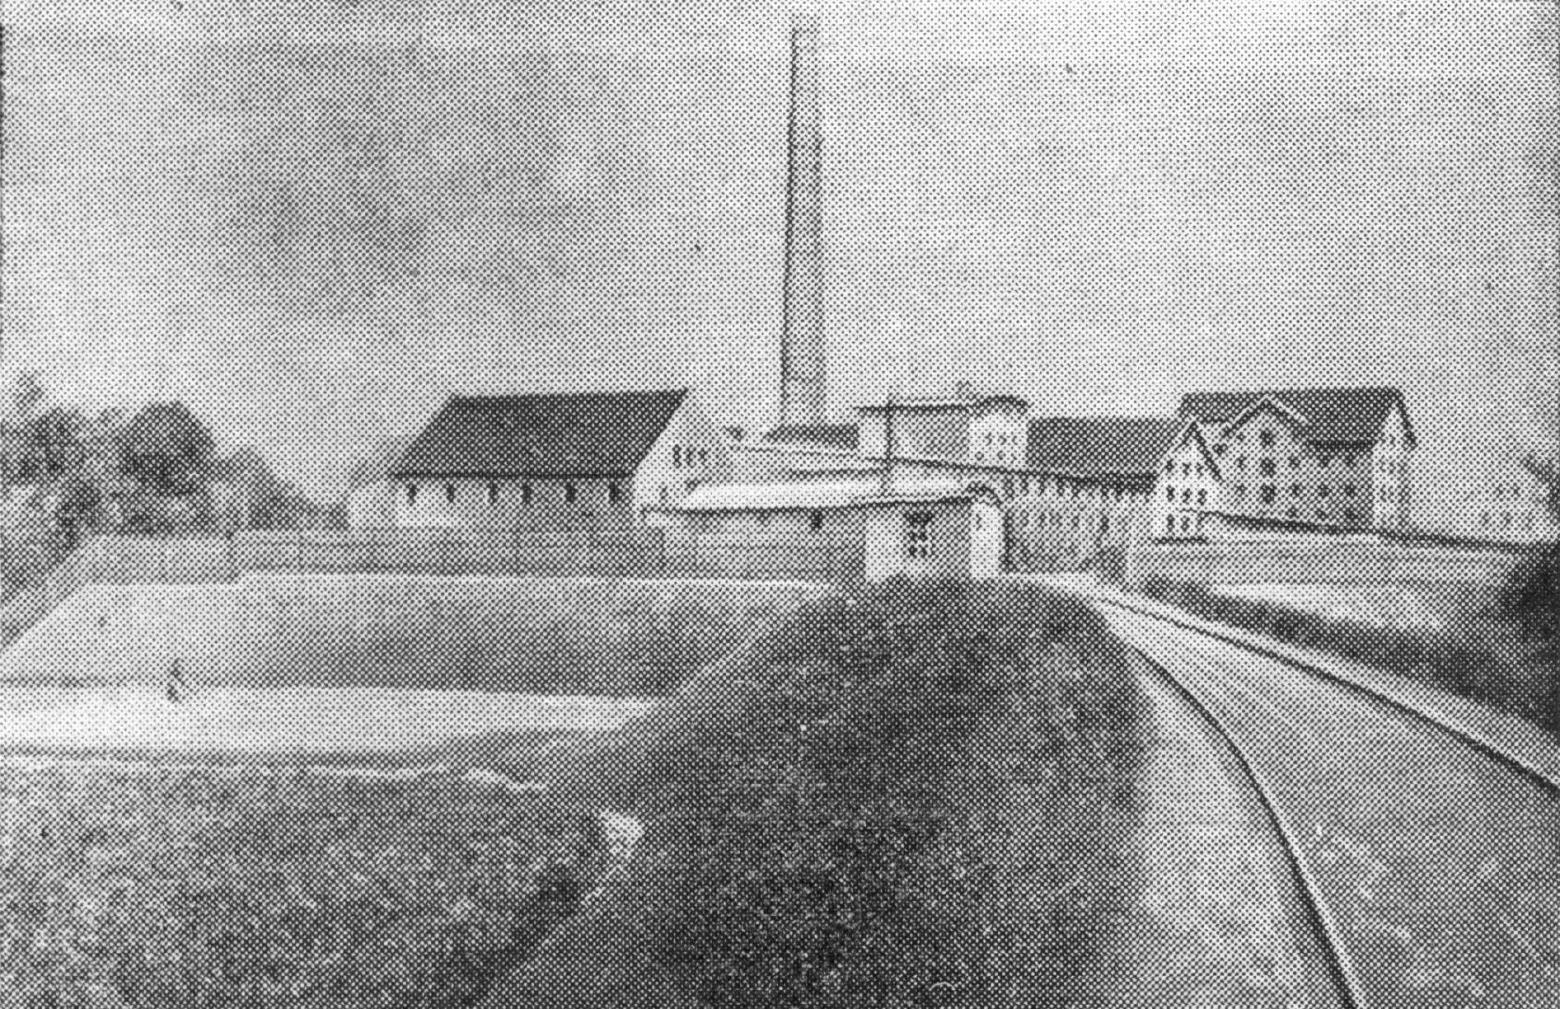 Zuckerfabrik Körbisdorf 1897